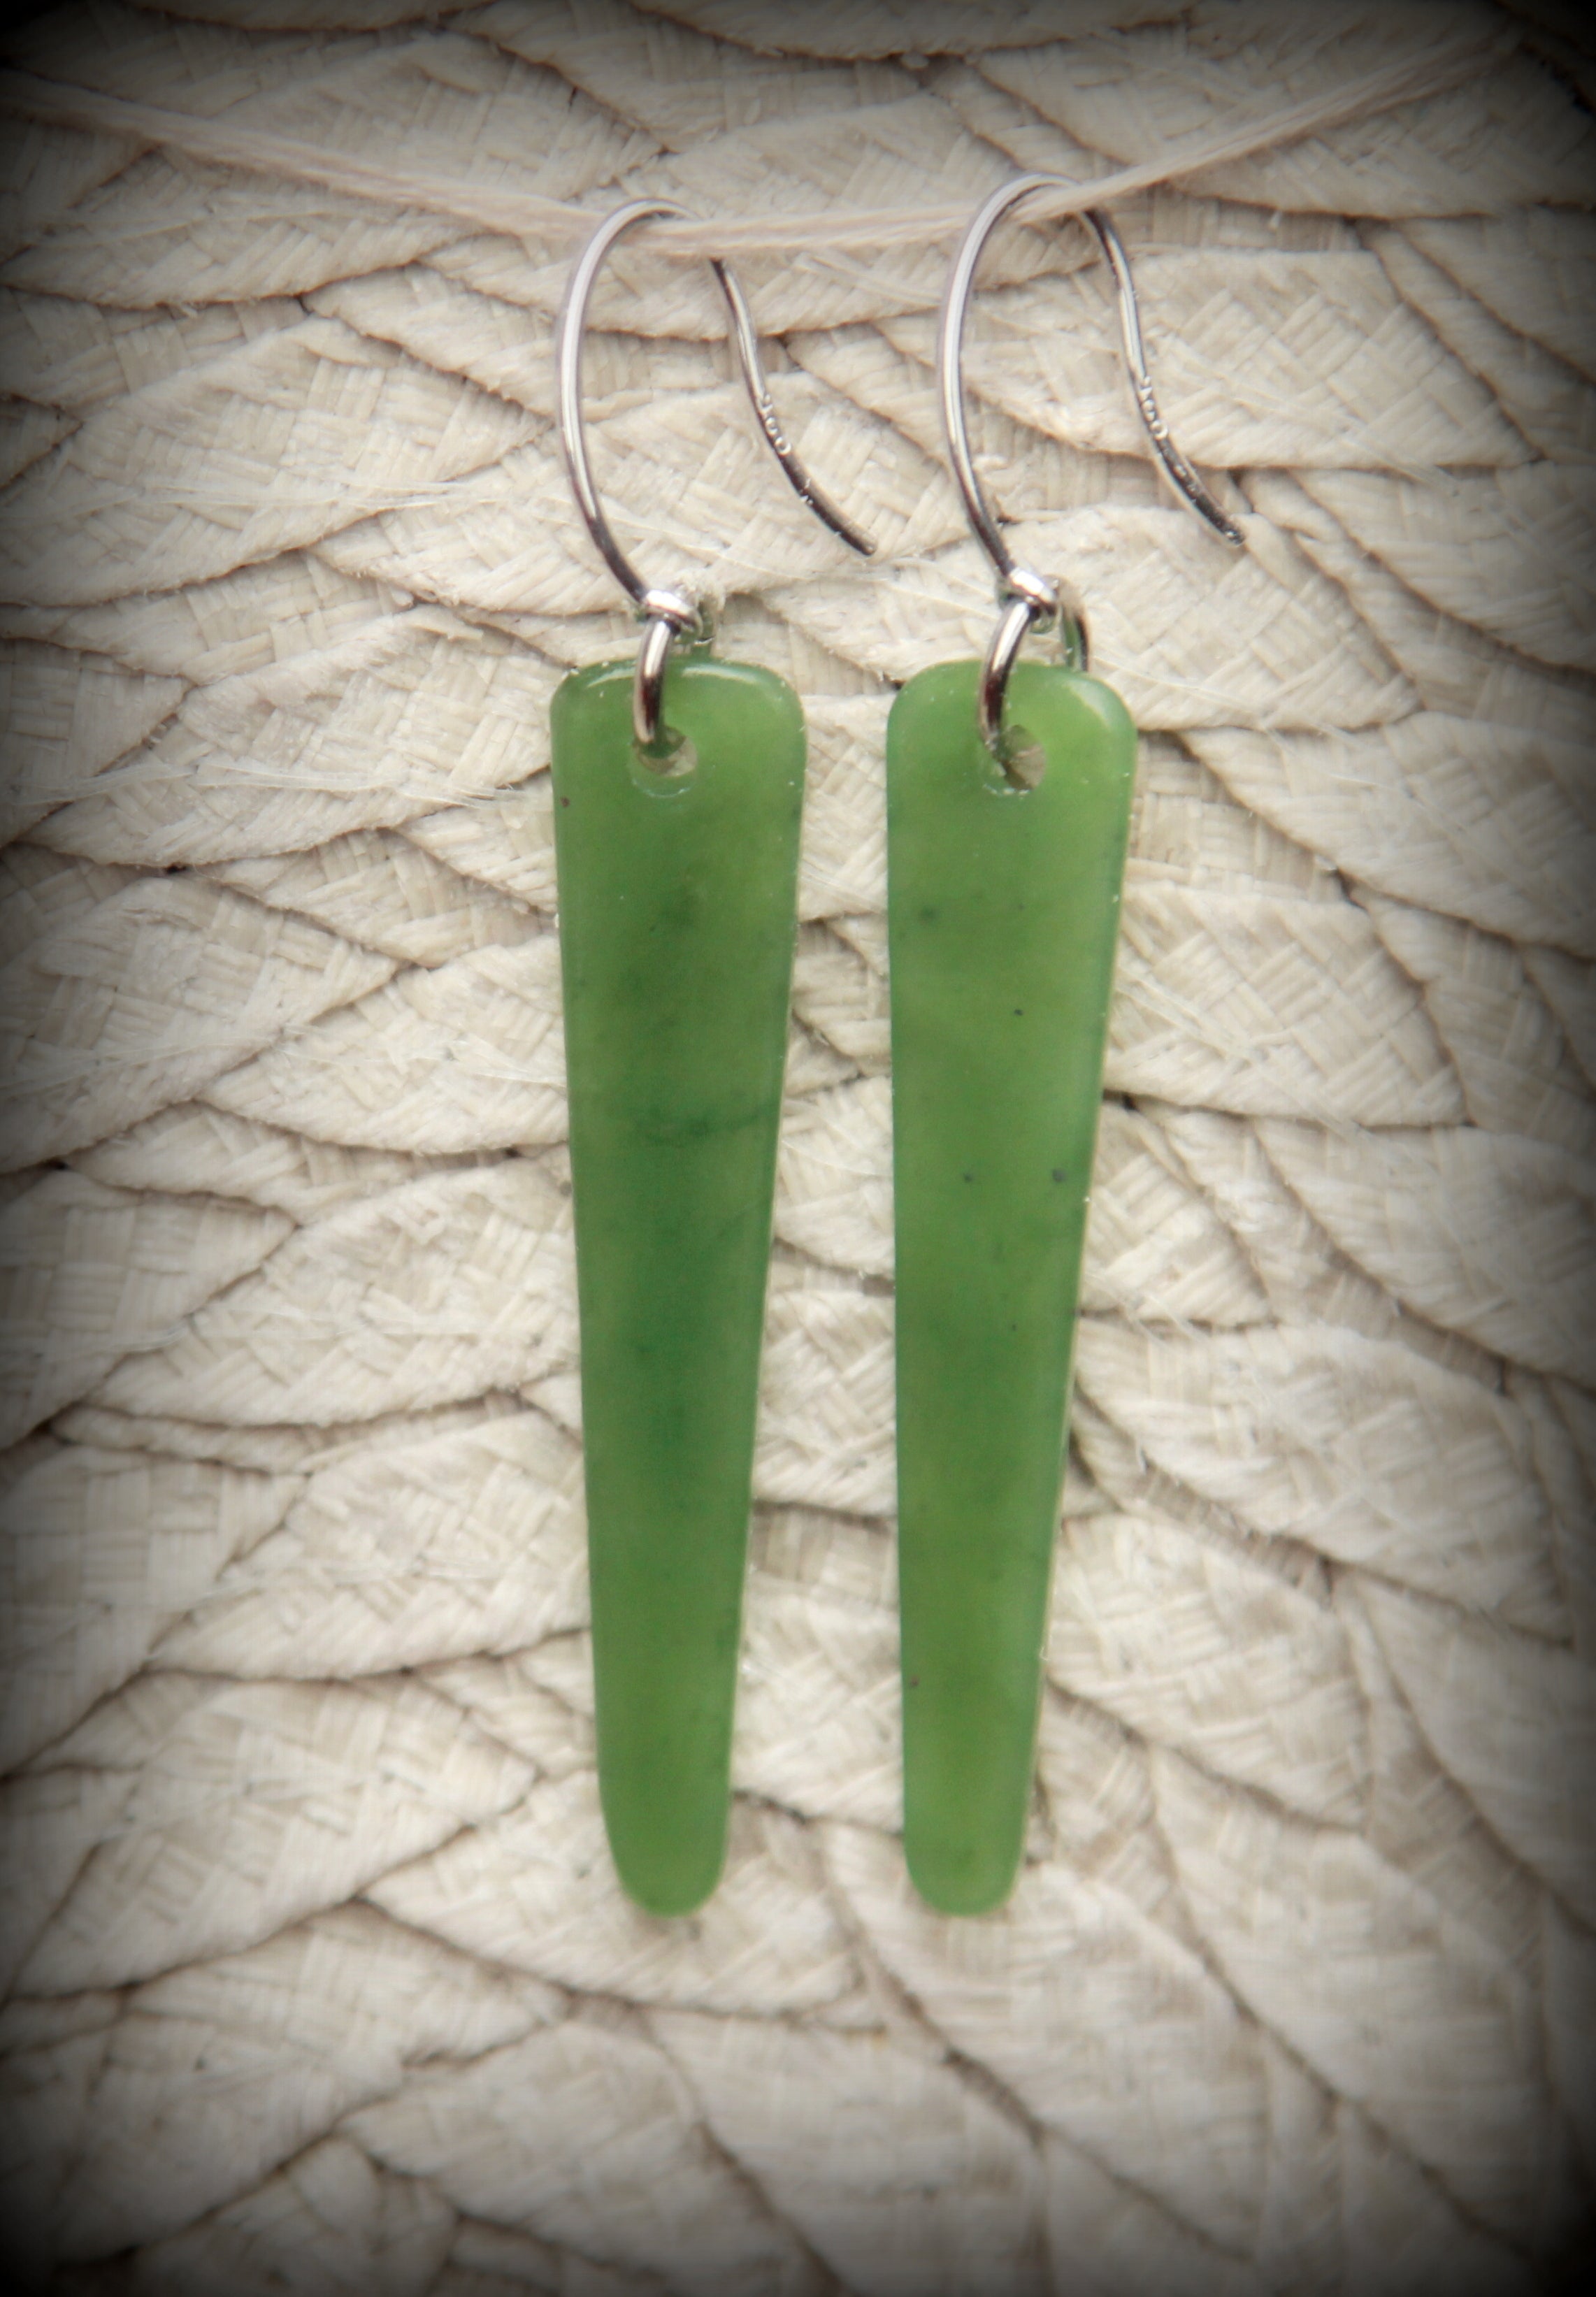 Greenstone Earrings item #7324